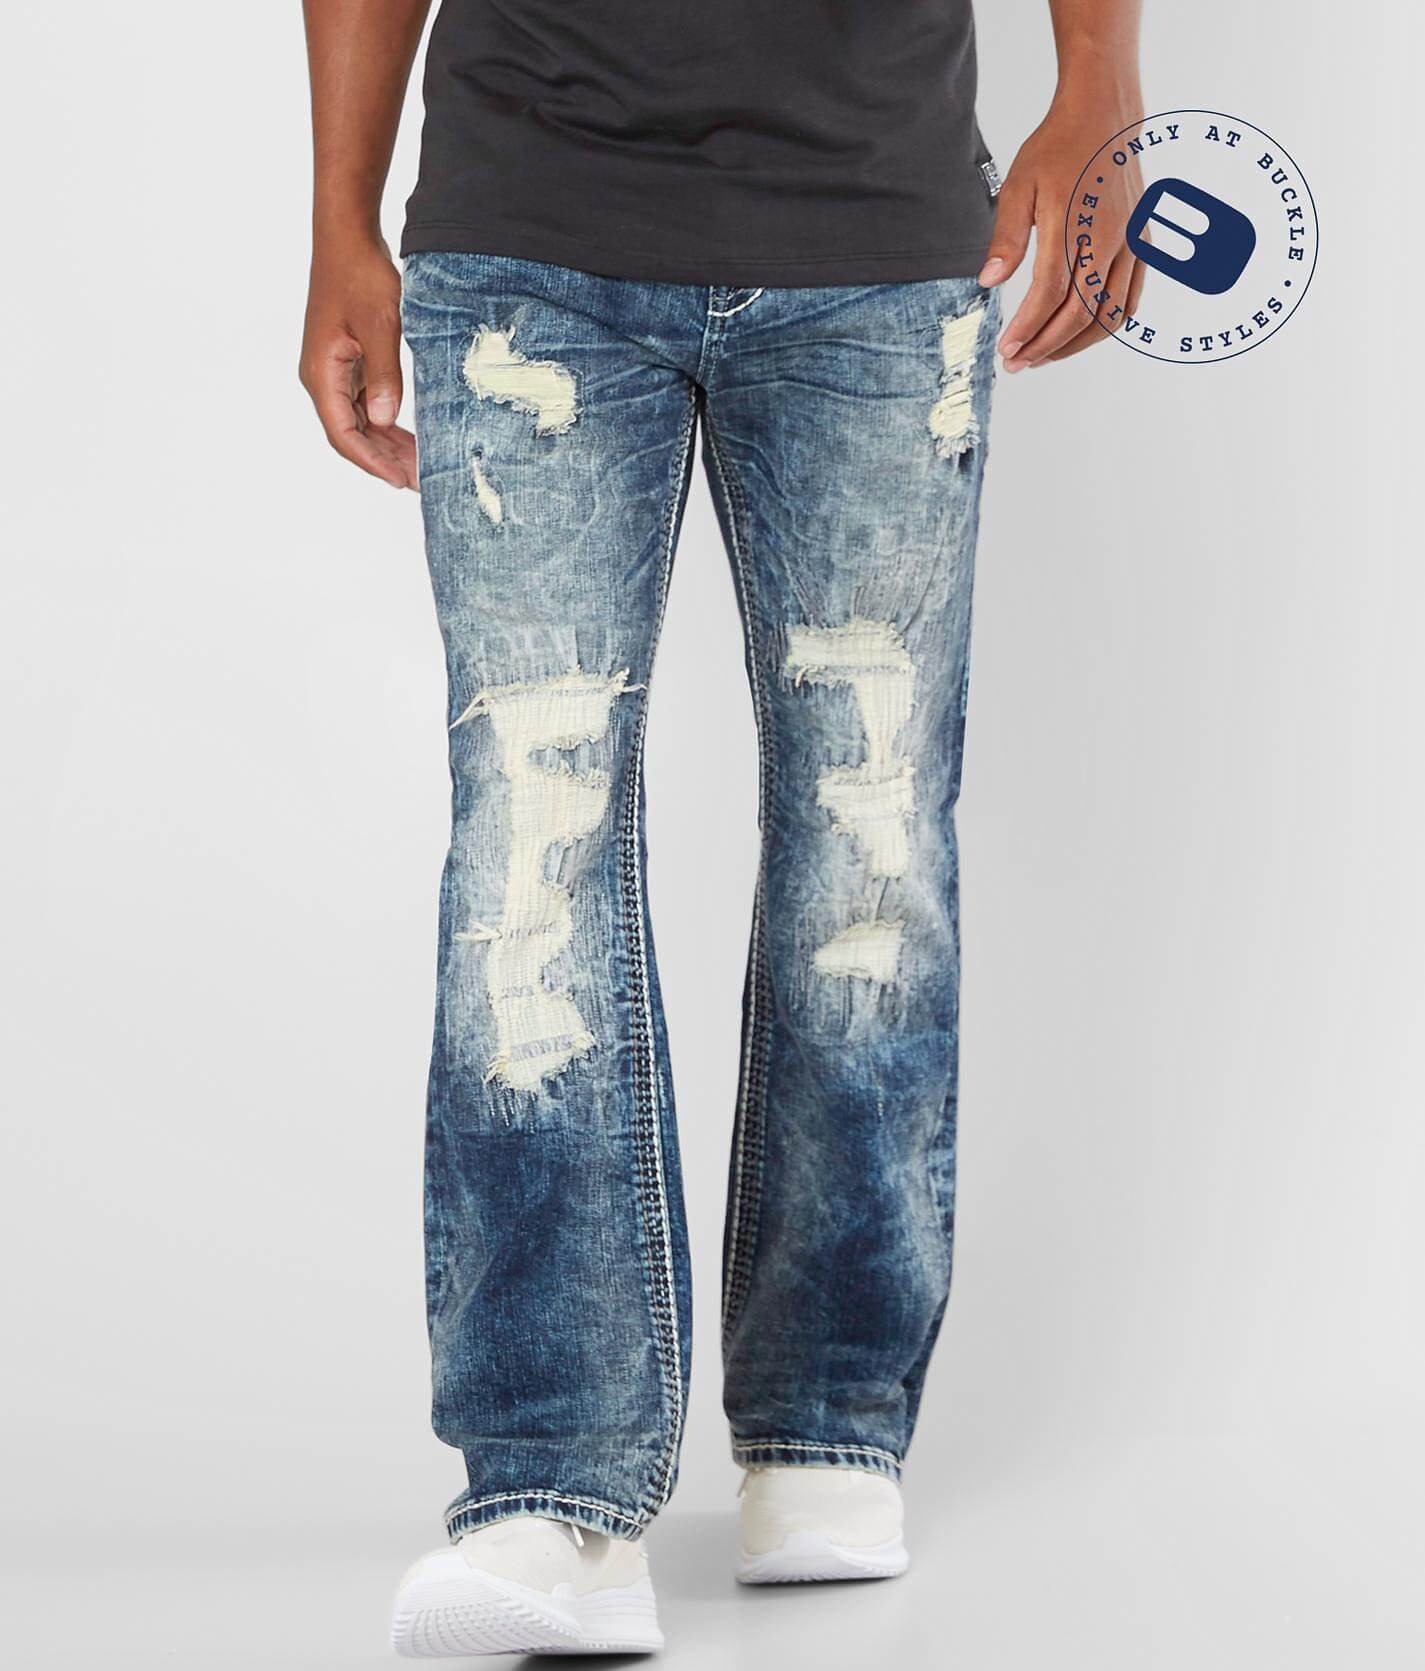 rock revival jeans mens bootcut